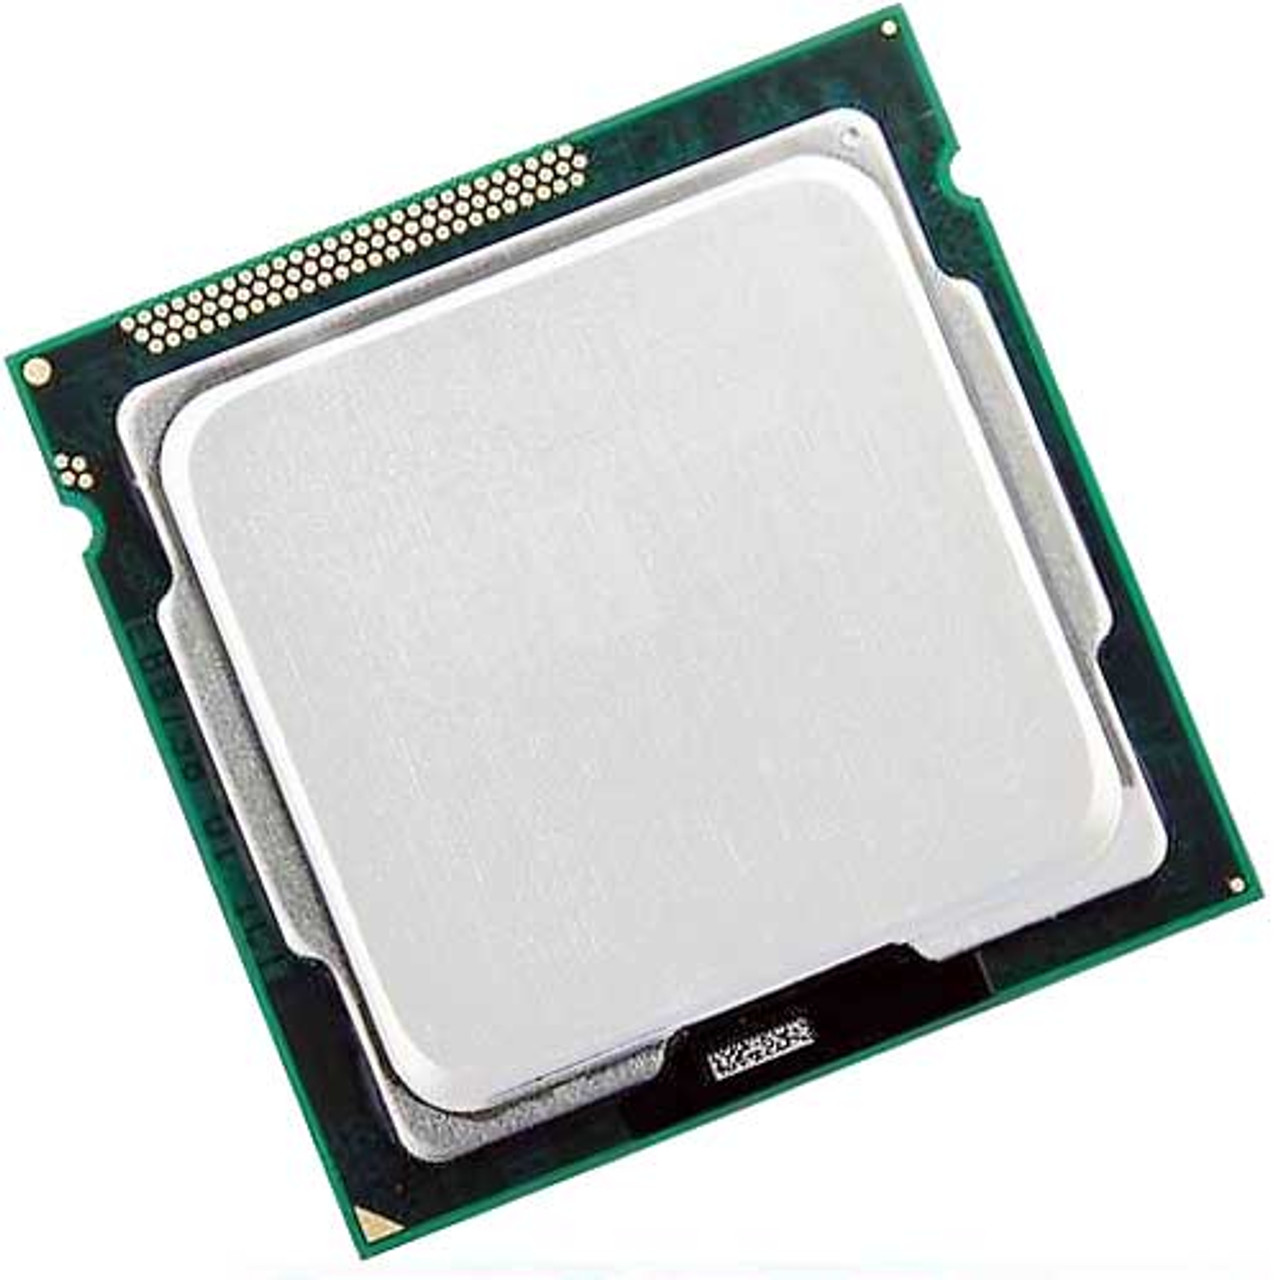 AMD Athlon 64 3200+ 2.0GHz Processor ADA3200CGBOX UPC 730143823203 - AMD